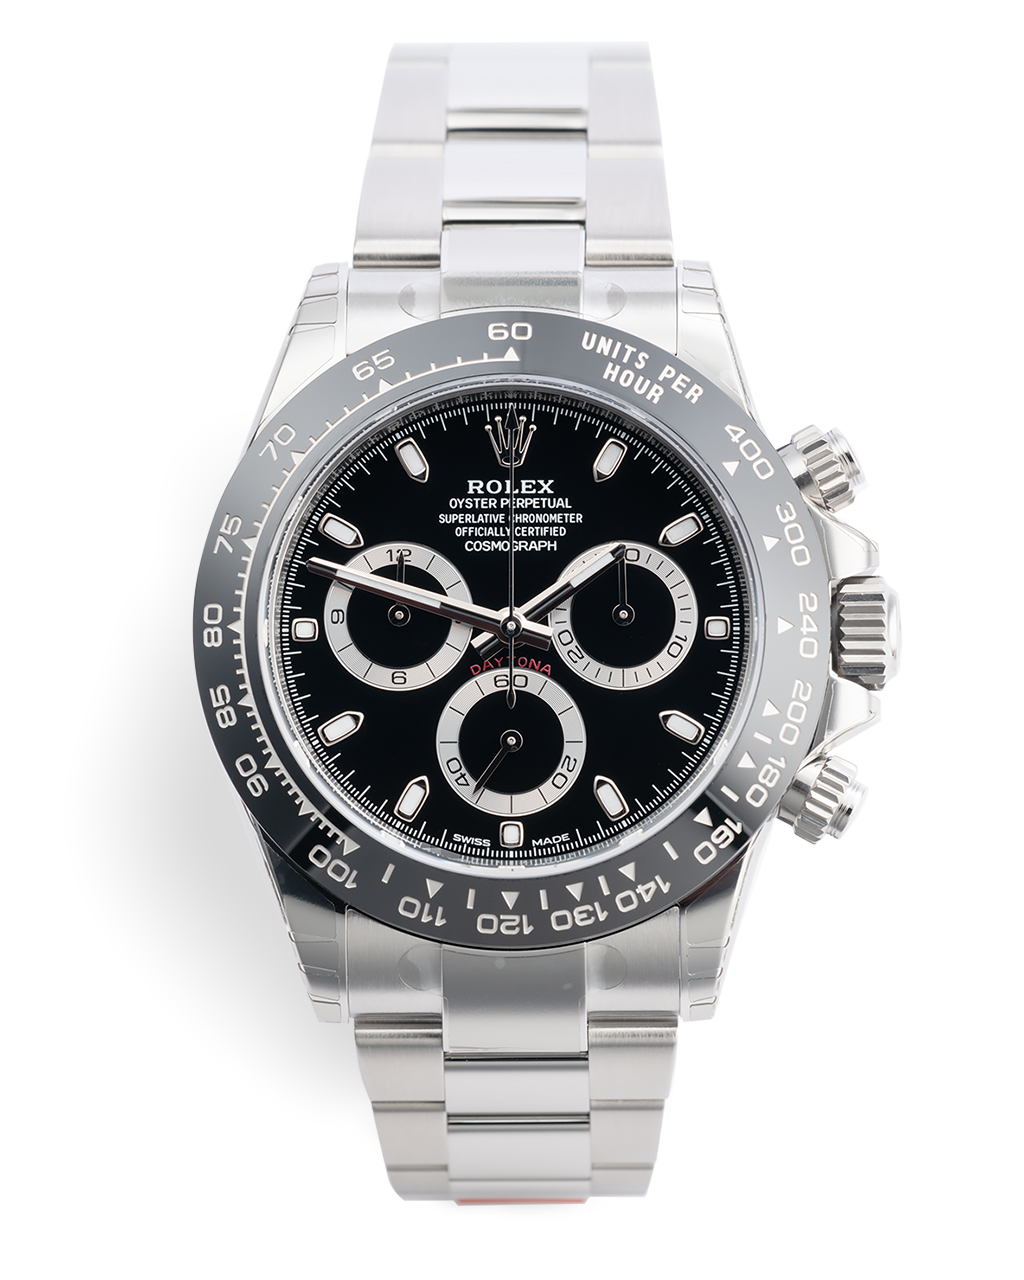 Rolex Cosmograph Daytona Watches | ref 116500LN | 'Rolex Warranty To ...